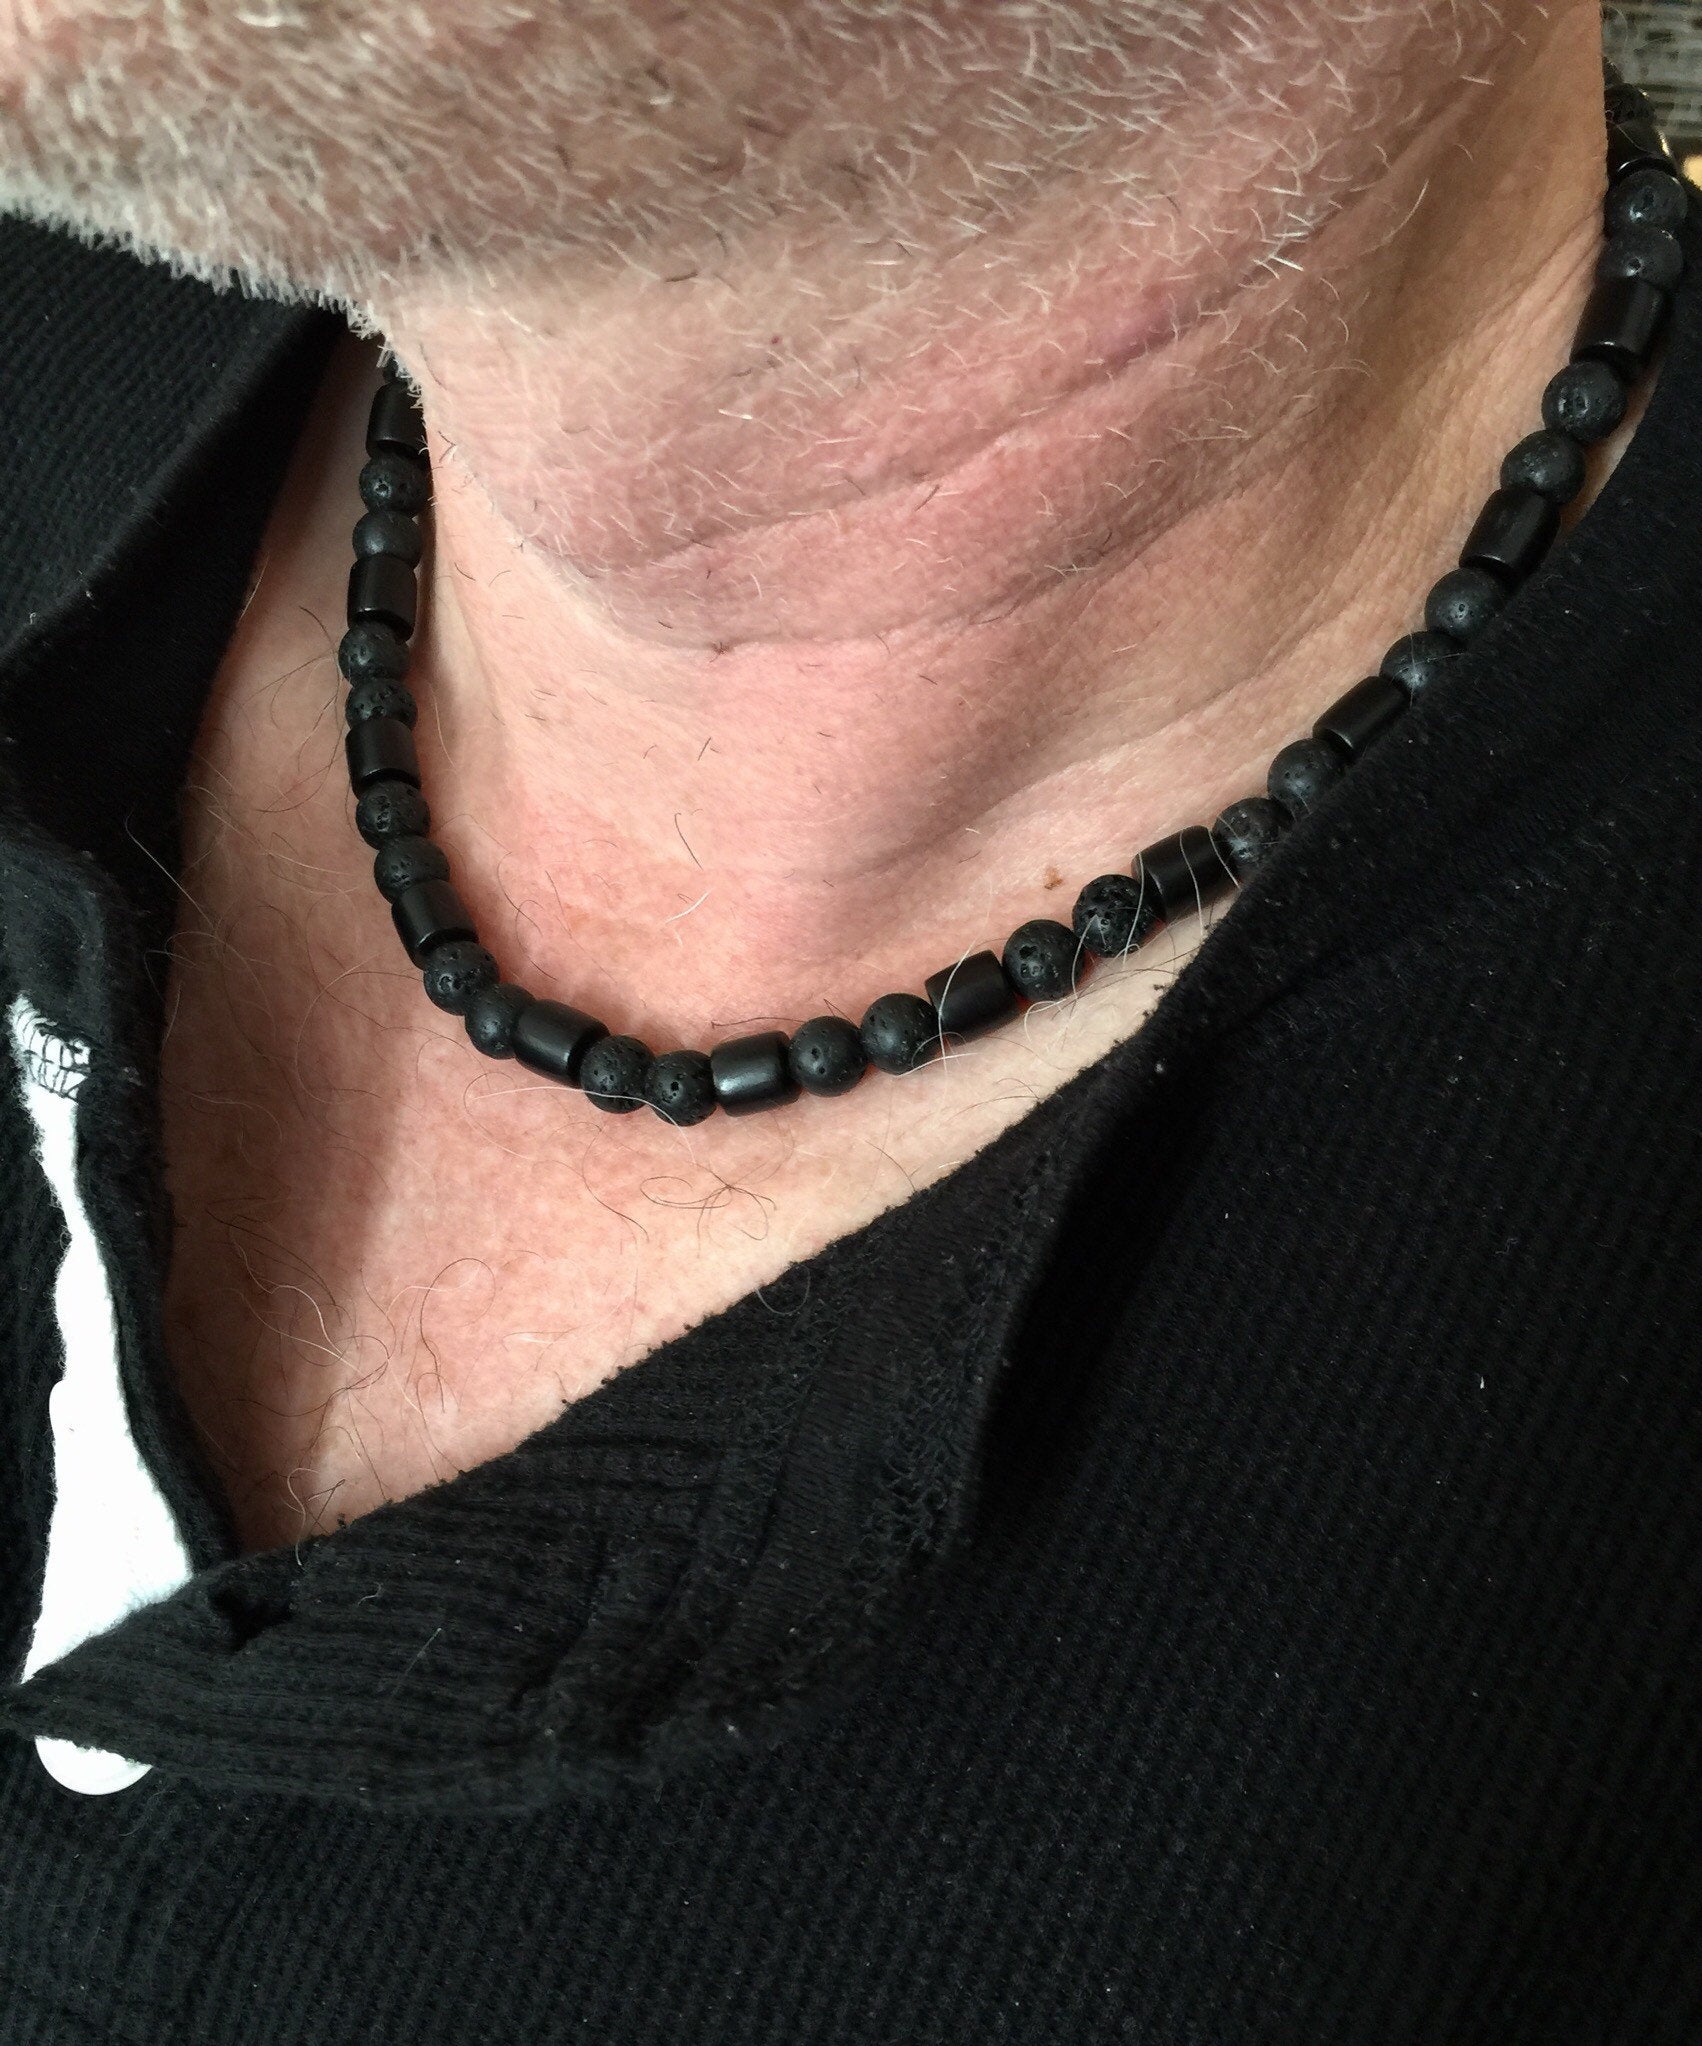 Black Titanium 3MM Bead Necklace Chain